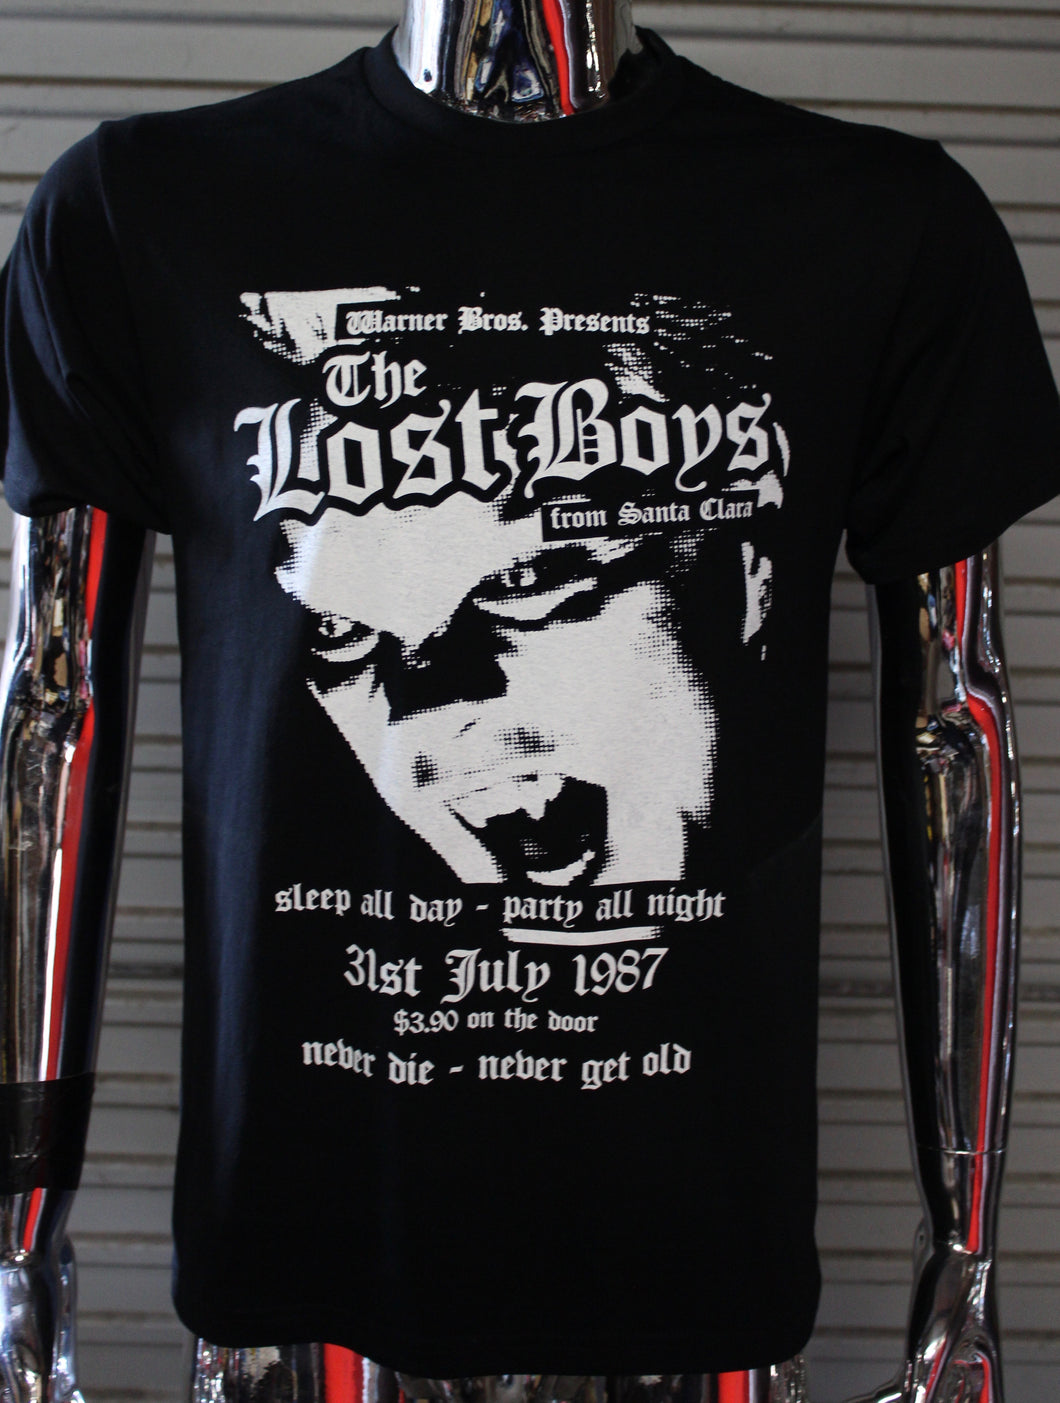 The Lost Boys DIY punk flyer T-shirt